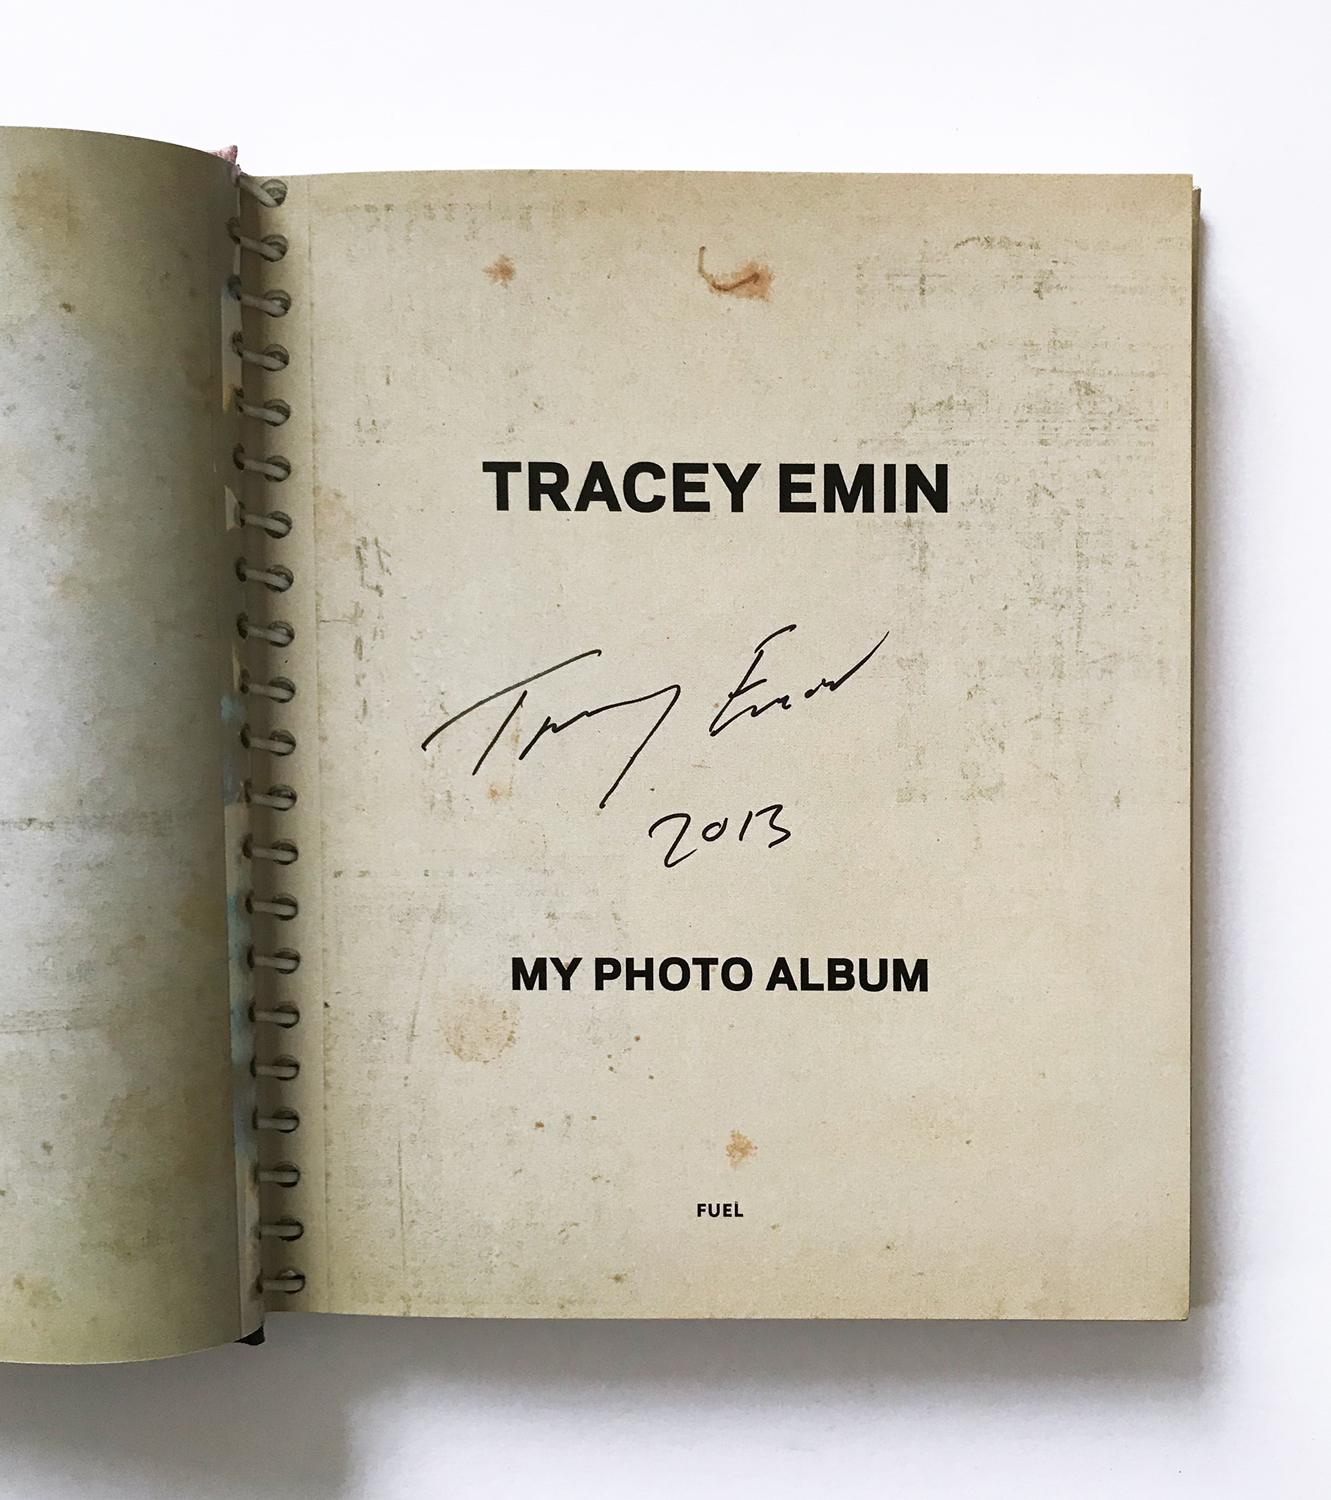 Tracey Emin (born 1963 in Croydon)
Sixteen, 2013
Medium: Giclée print on archival fine art paper housed in a black print box, accompanied by the book My Photo Album
Print dimensions: 25.4 x 20.3 cm (10 x 8 in)
Book dimensions: 18 x 22 cm (7.1 x 8.7